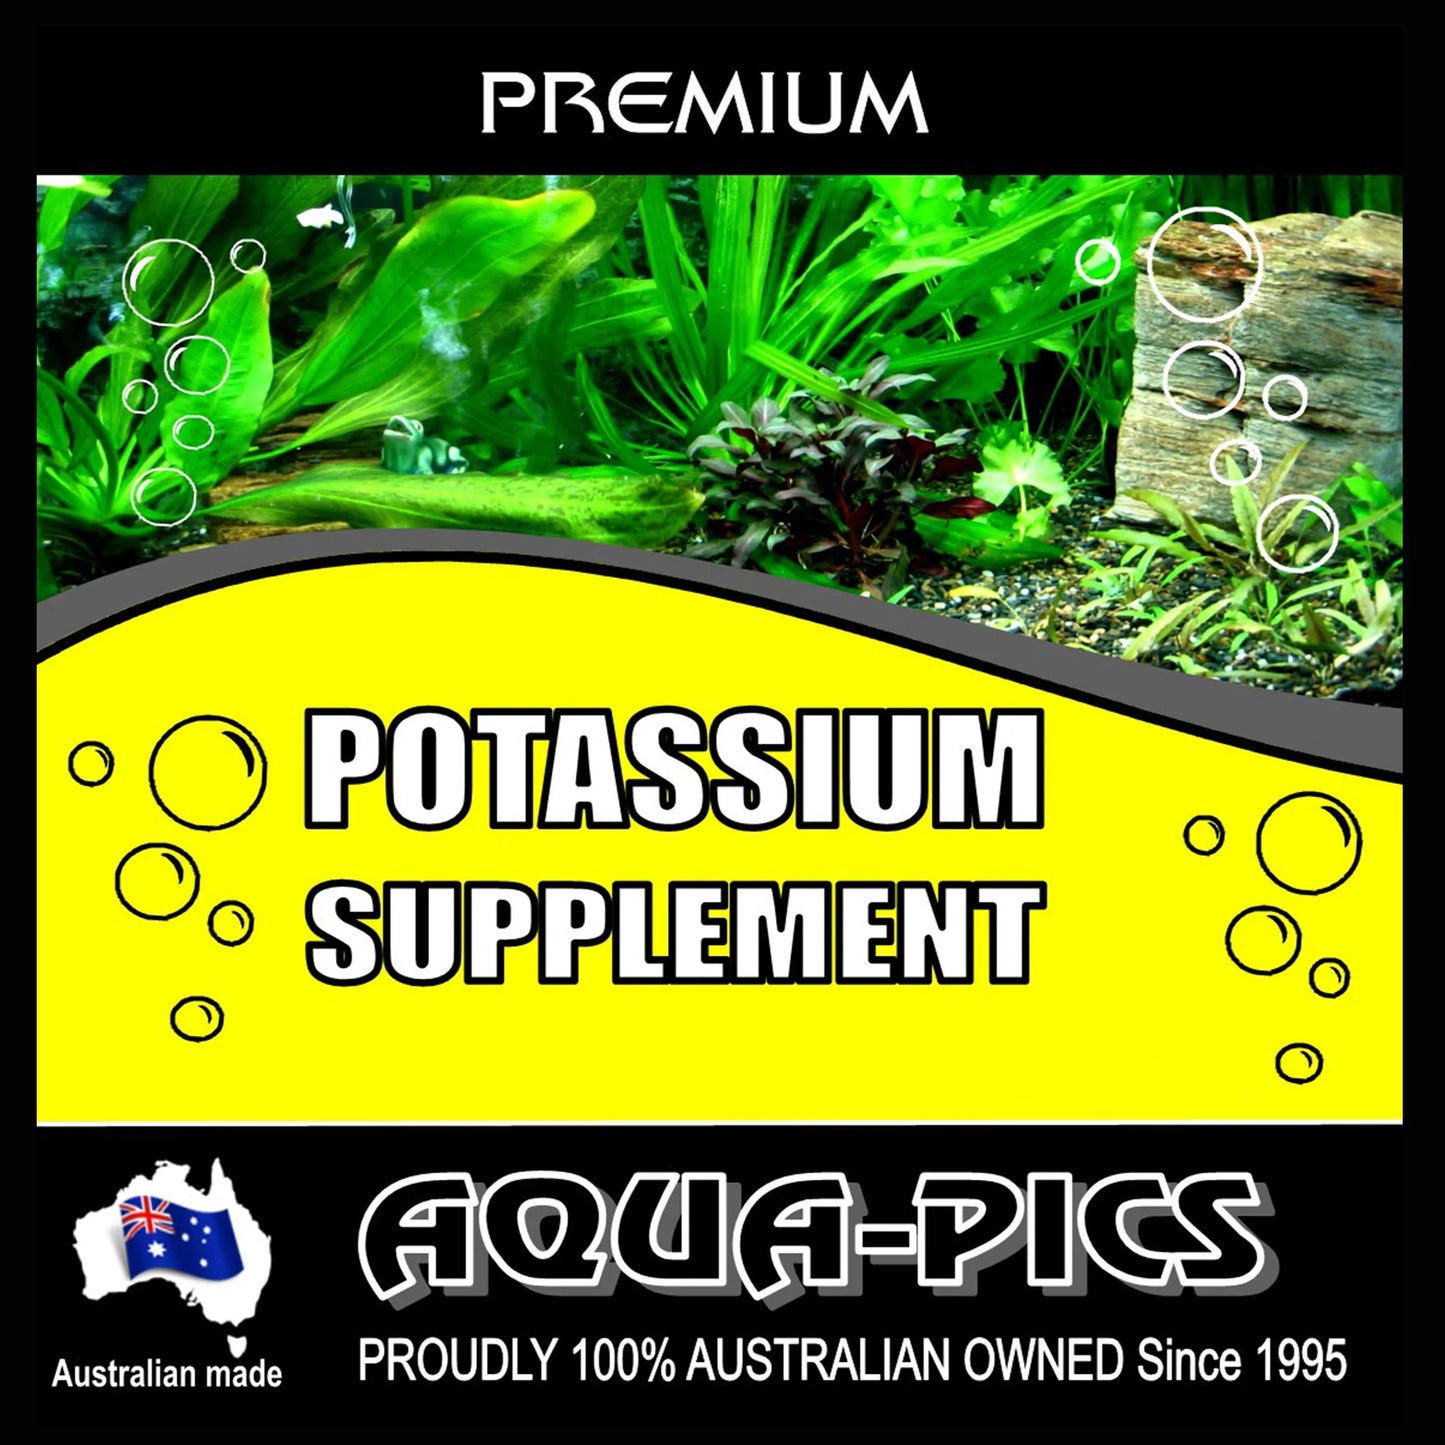 Potassium Supplement 500g